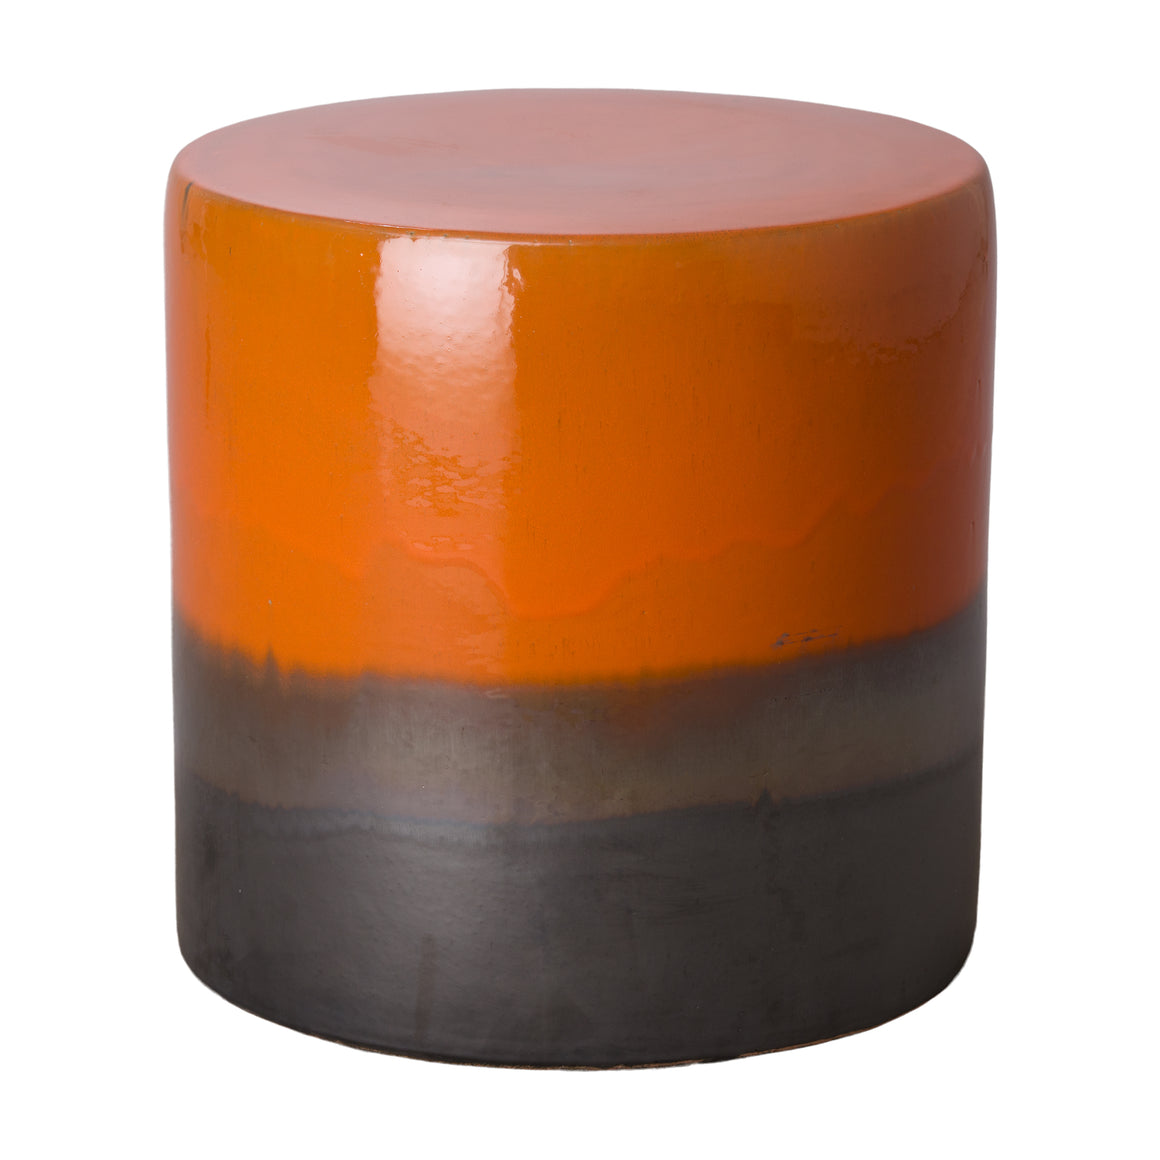 Two-Tone Ceramic Garden Stool/Table with a Burnt Orange Glaze